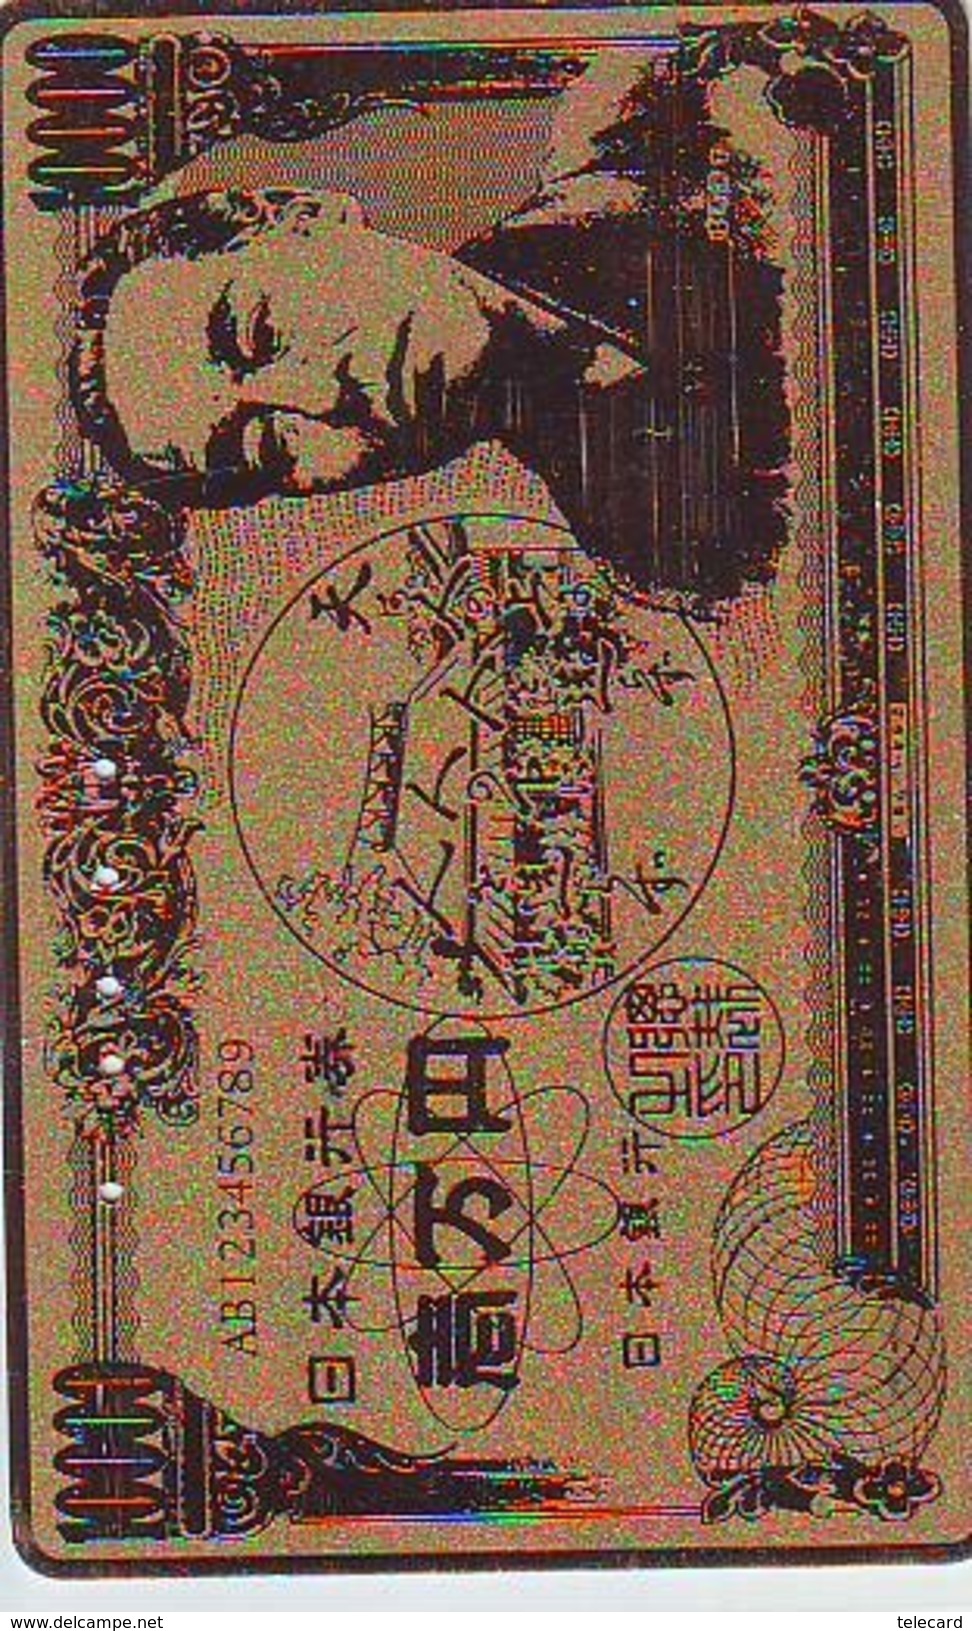 Télécarte JAPON * Billet De Banque (155) Notes Money Banknote Bill * Bankbiljet PHONECARD Japan * Coins * MUNTEN * - Sellos & Monedas